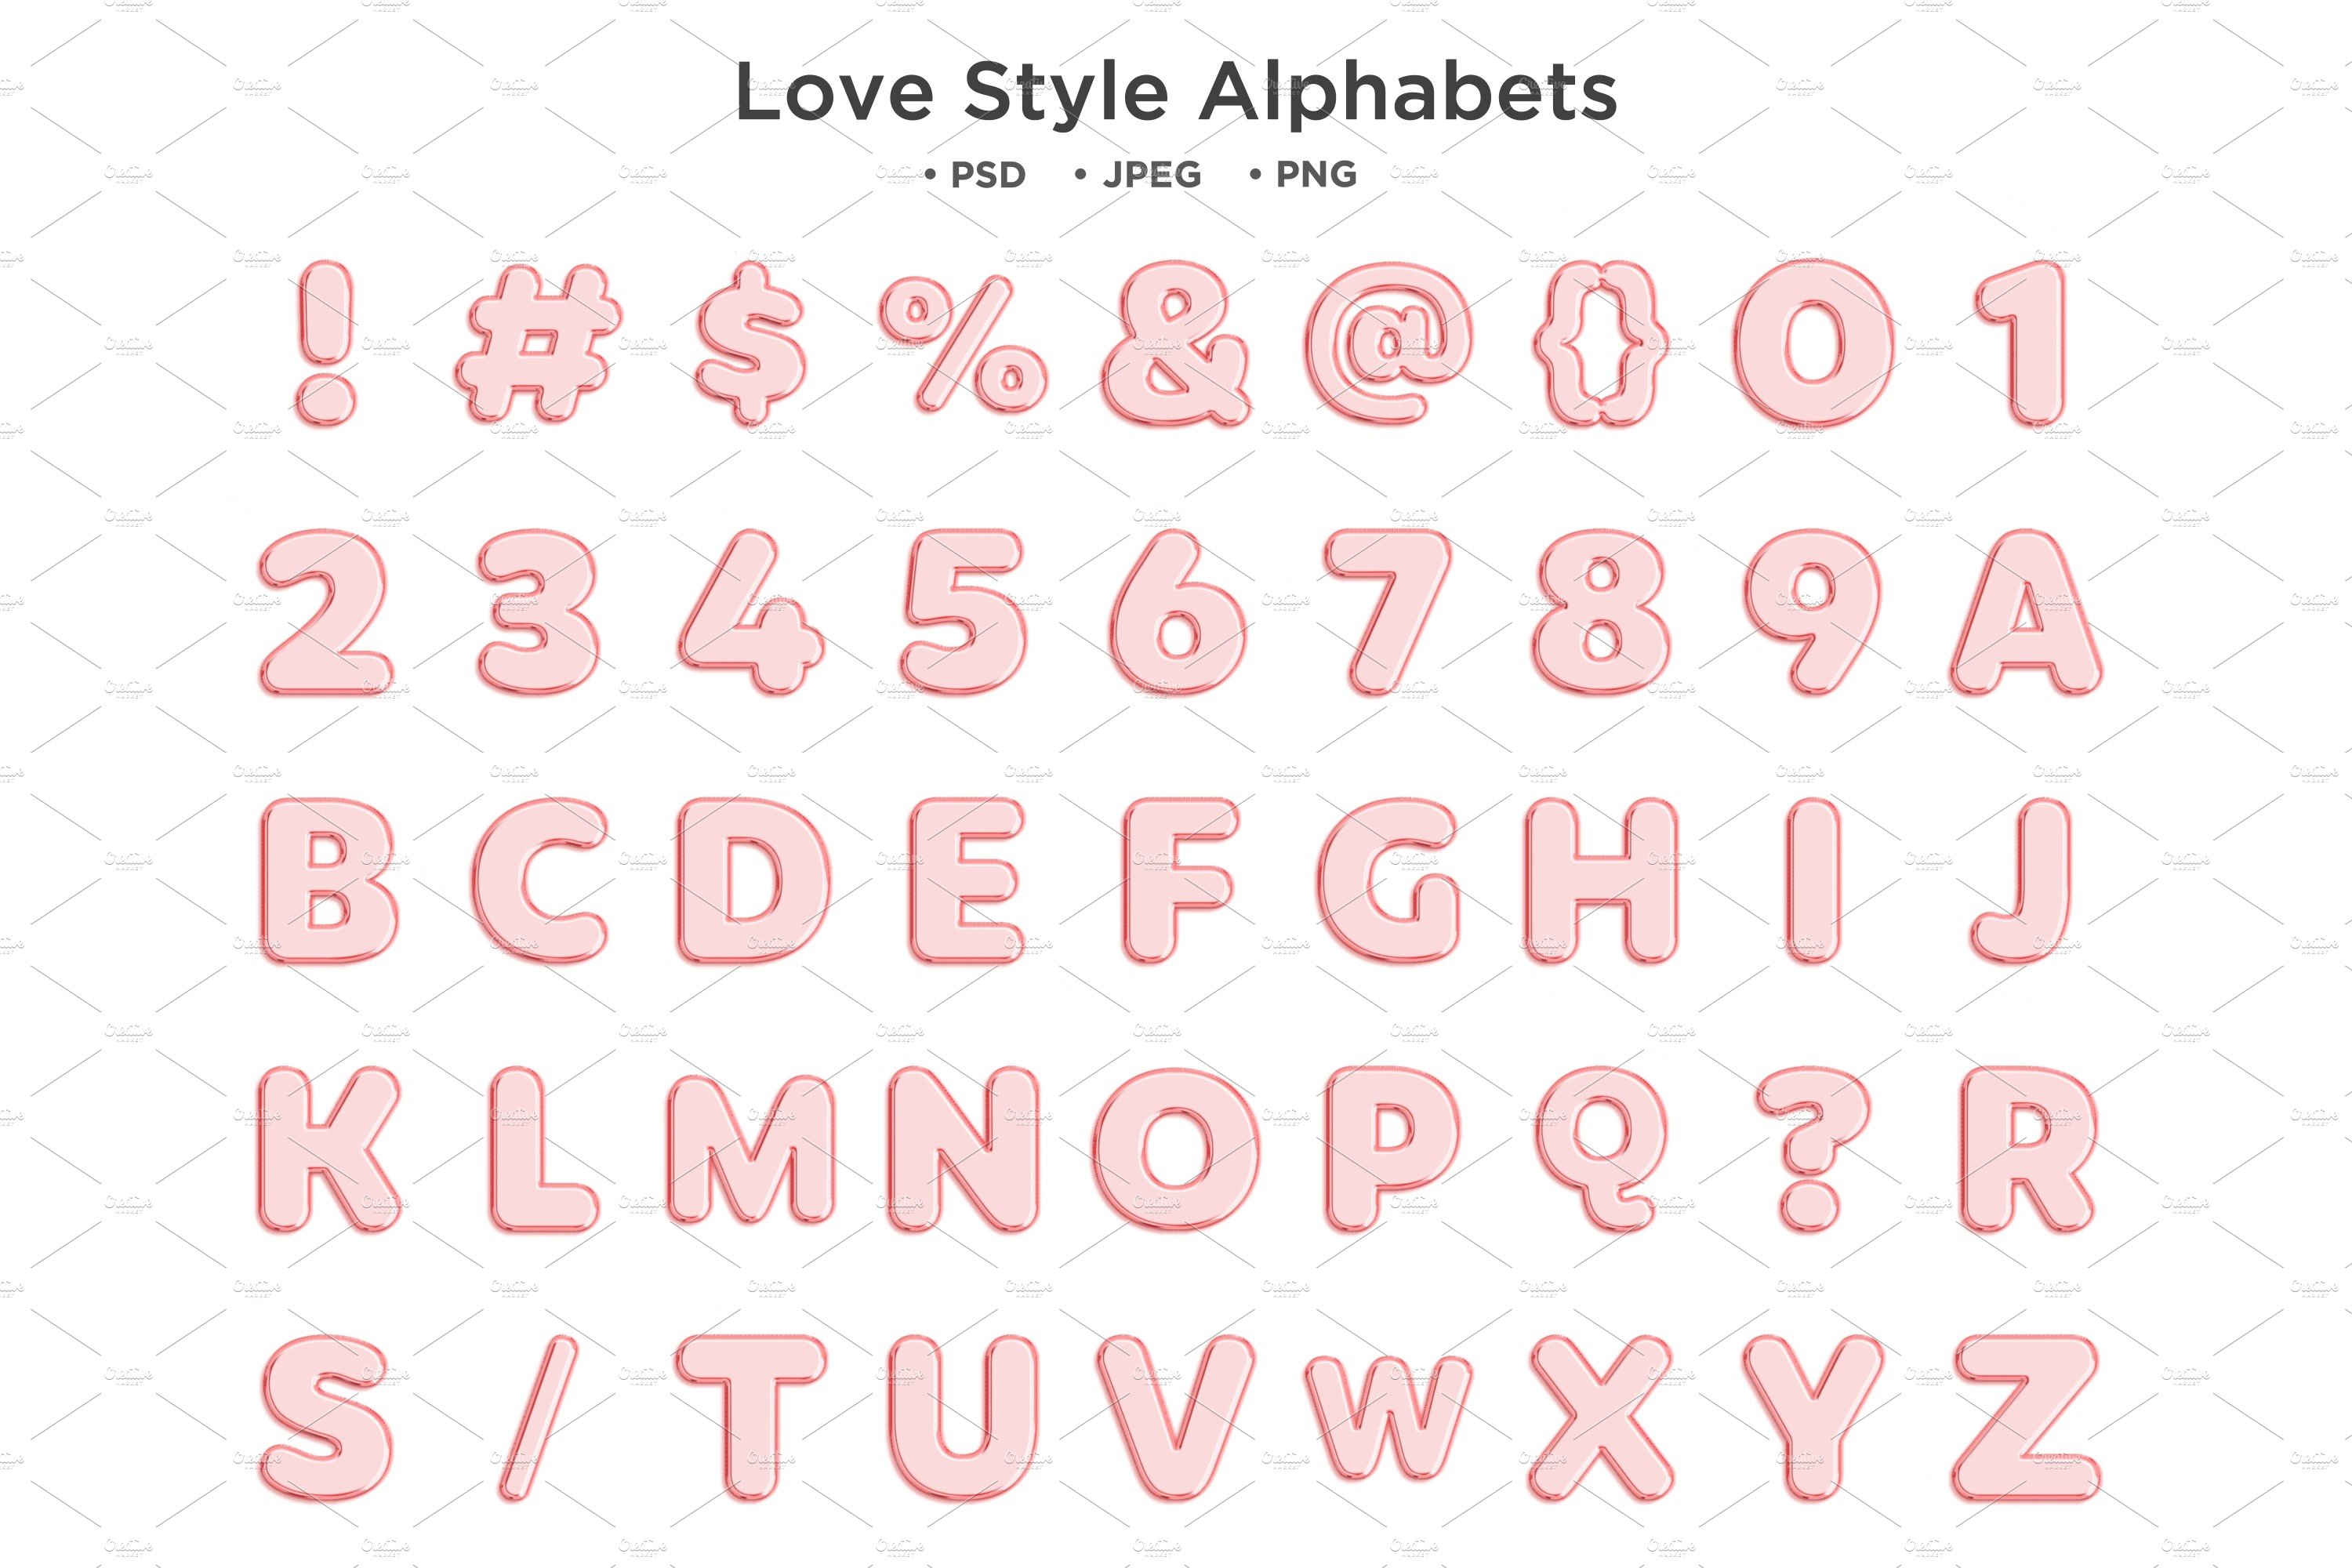 Love Style Alphabet Typographycover image.